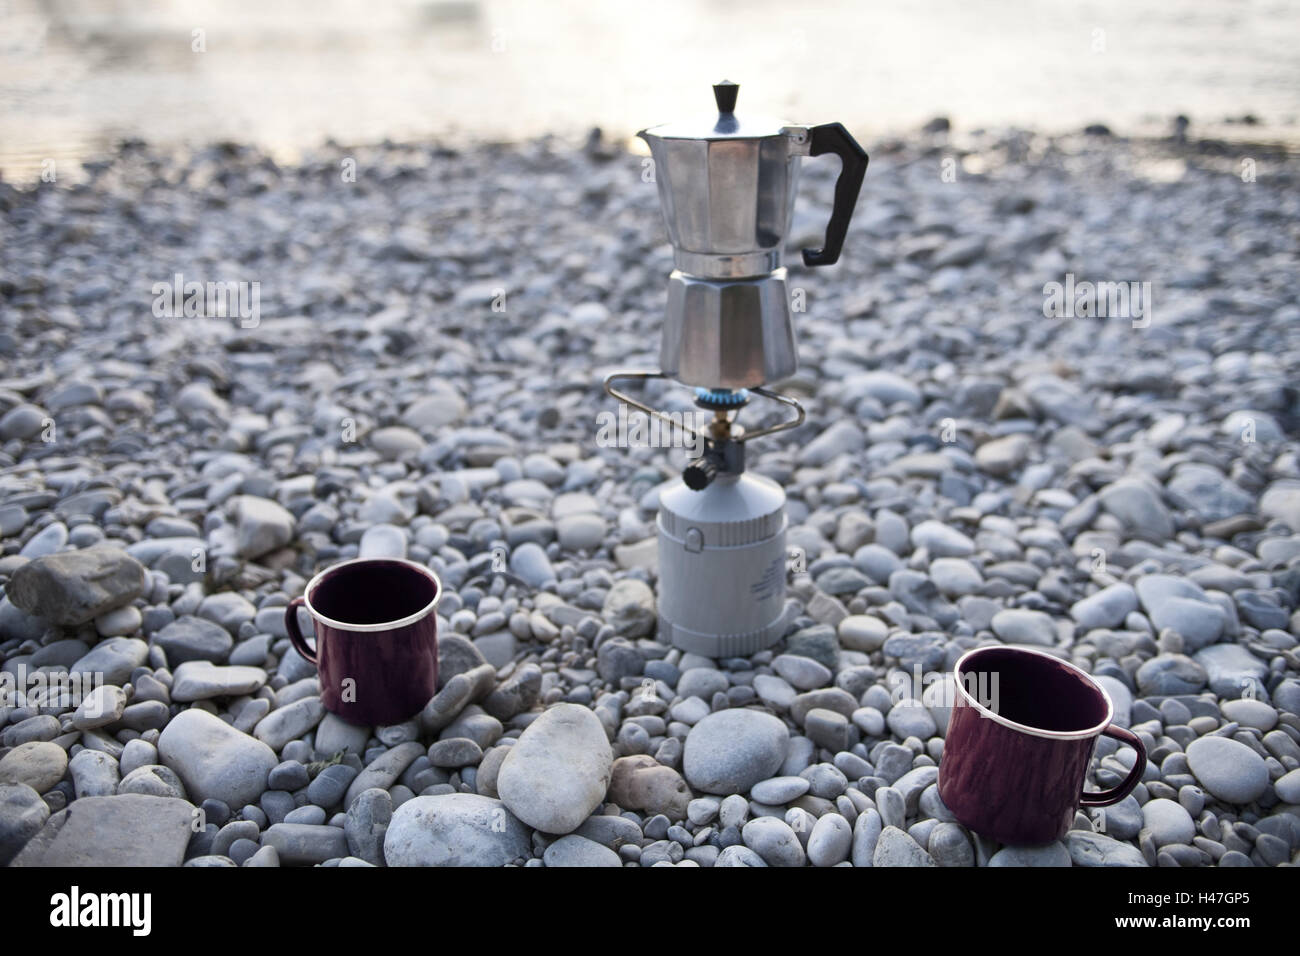 Stovetop espresso maker on camping stove, Fondo, Trentino, Italy Stock  Photo - Alamy